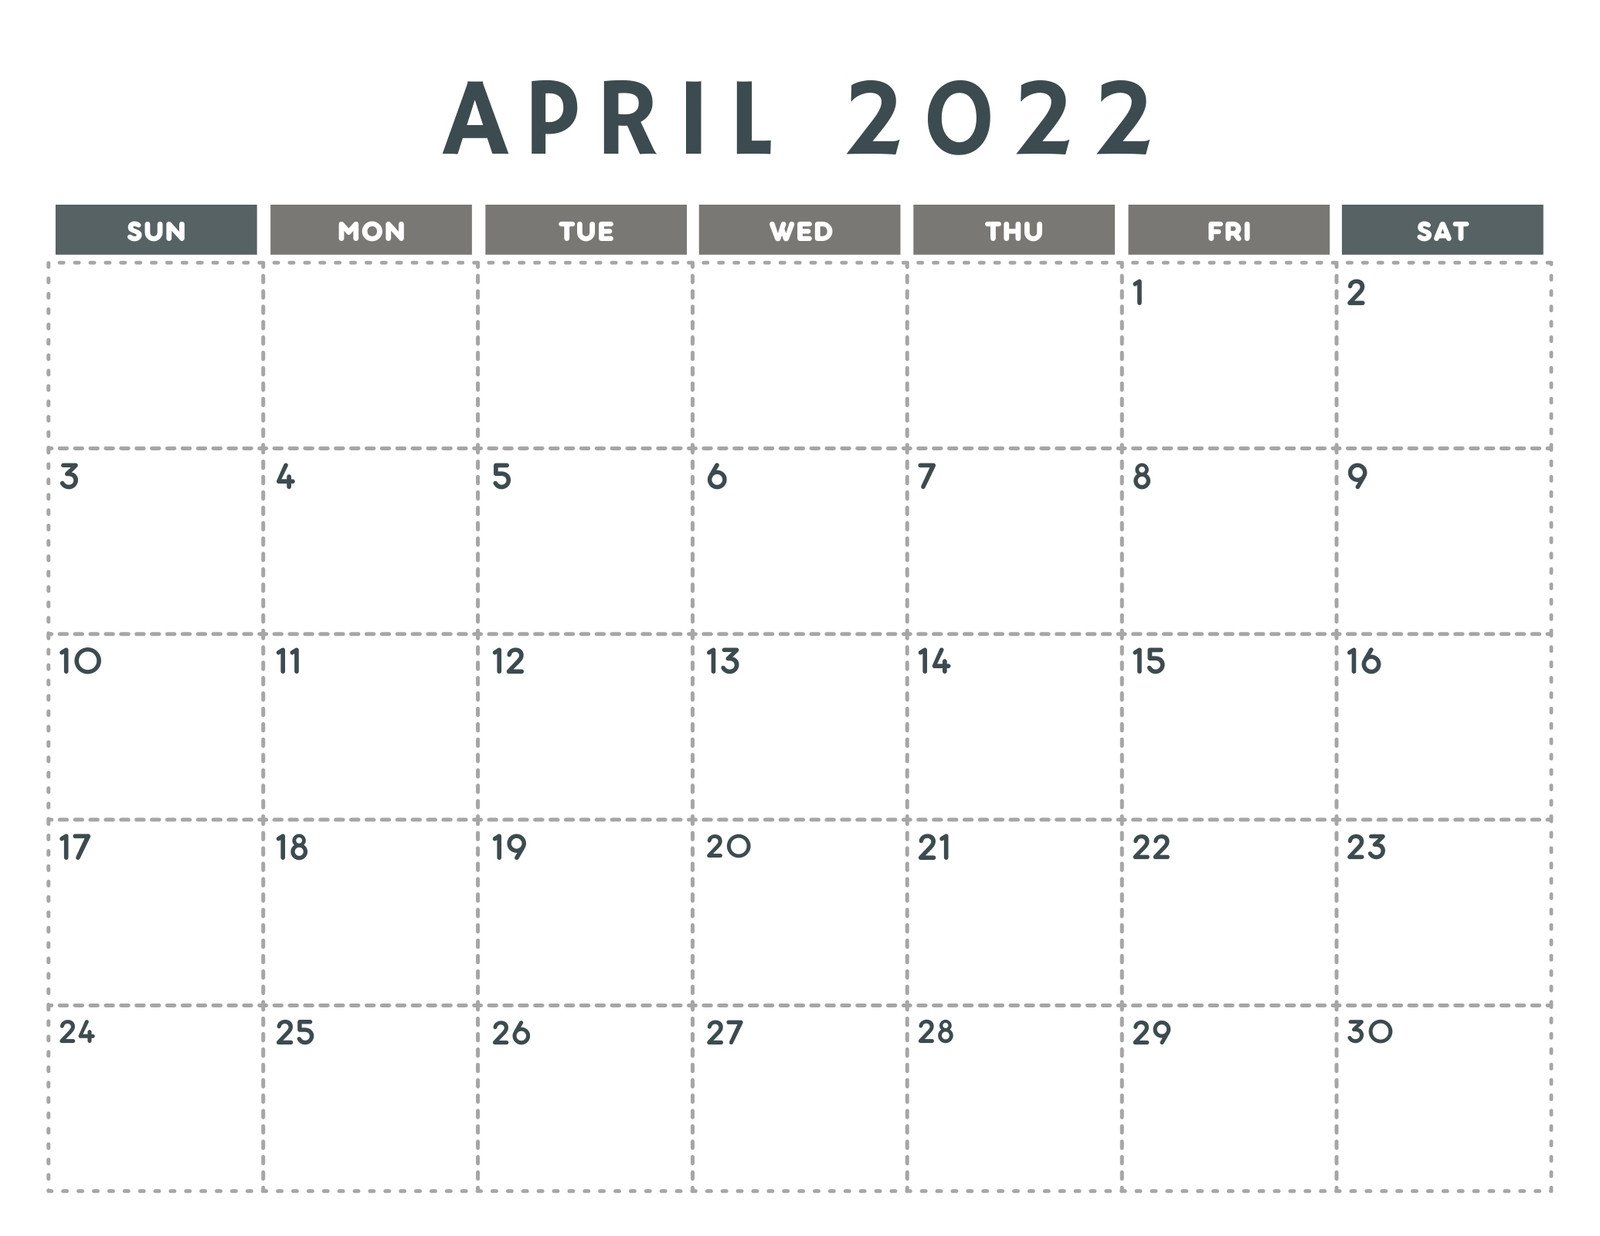 2021 Monthly Planner Table Chart Year Calendar Memo Desktop Calendar Schedule US